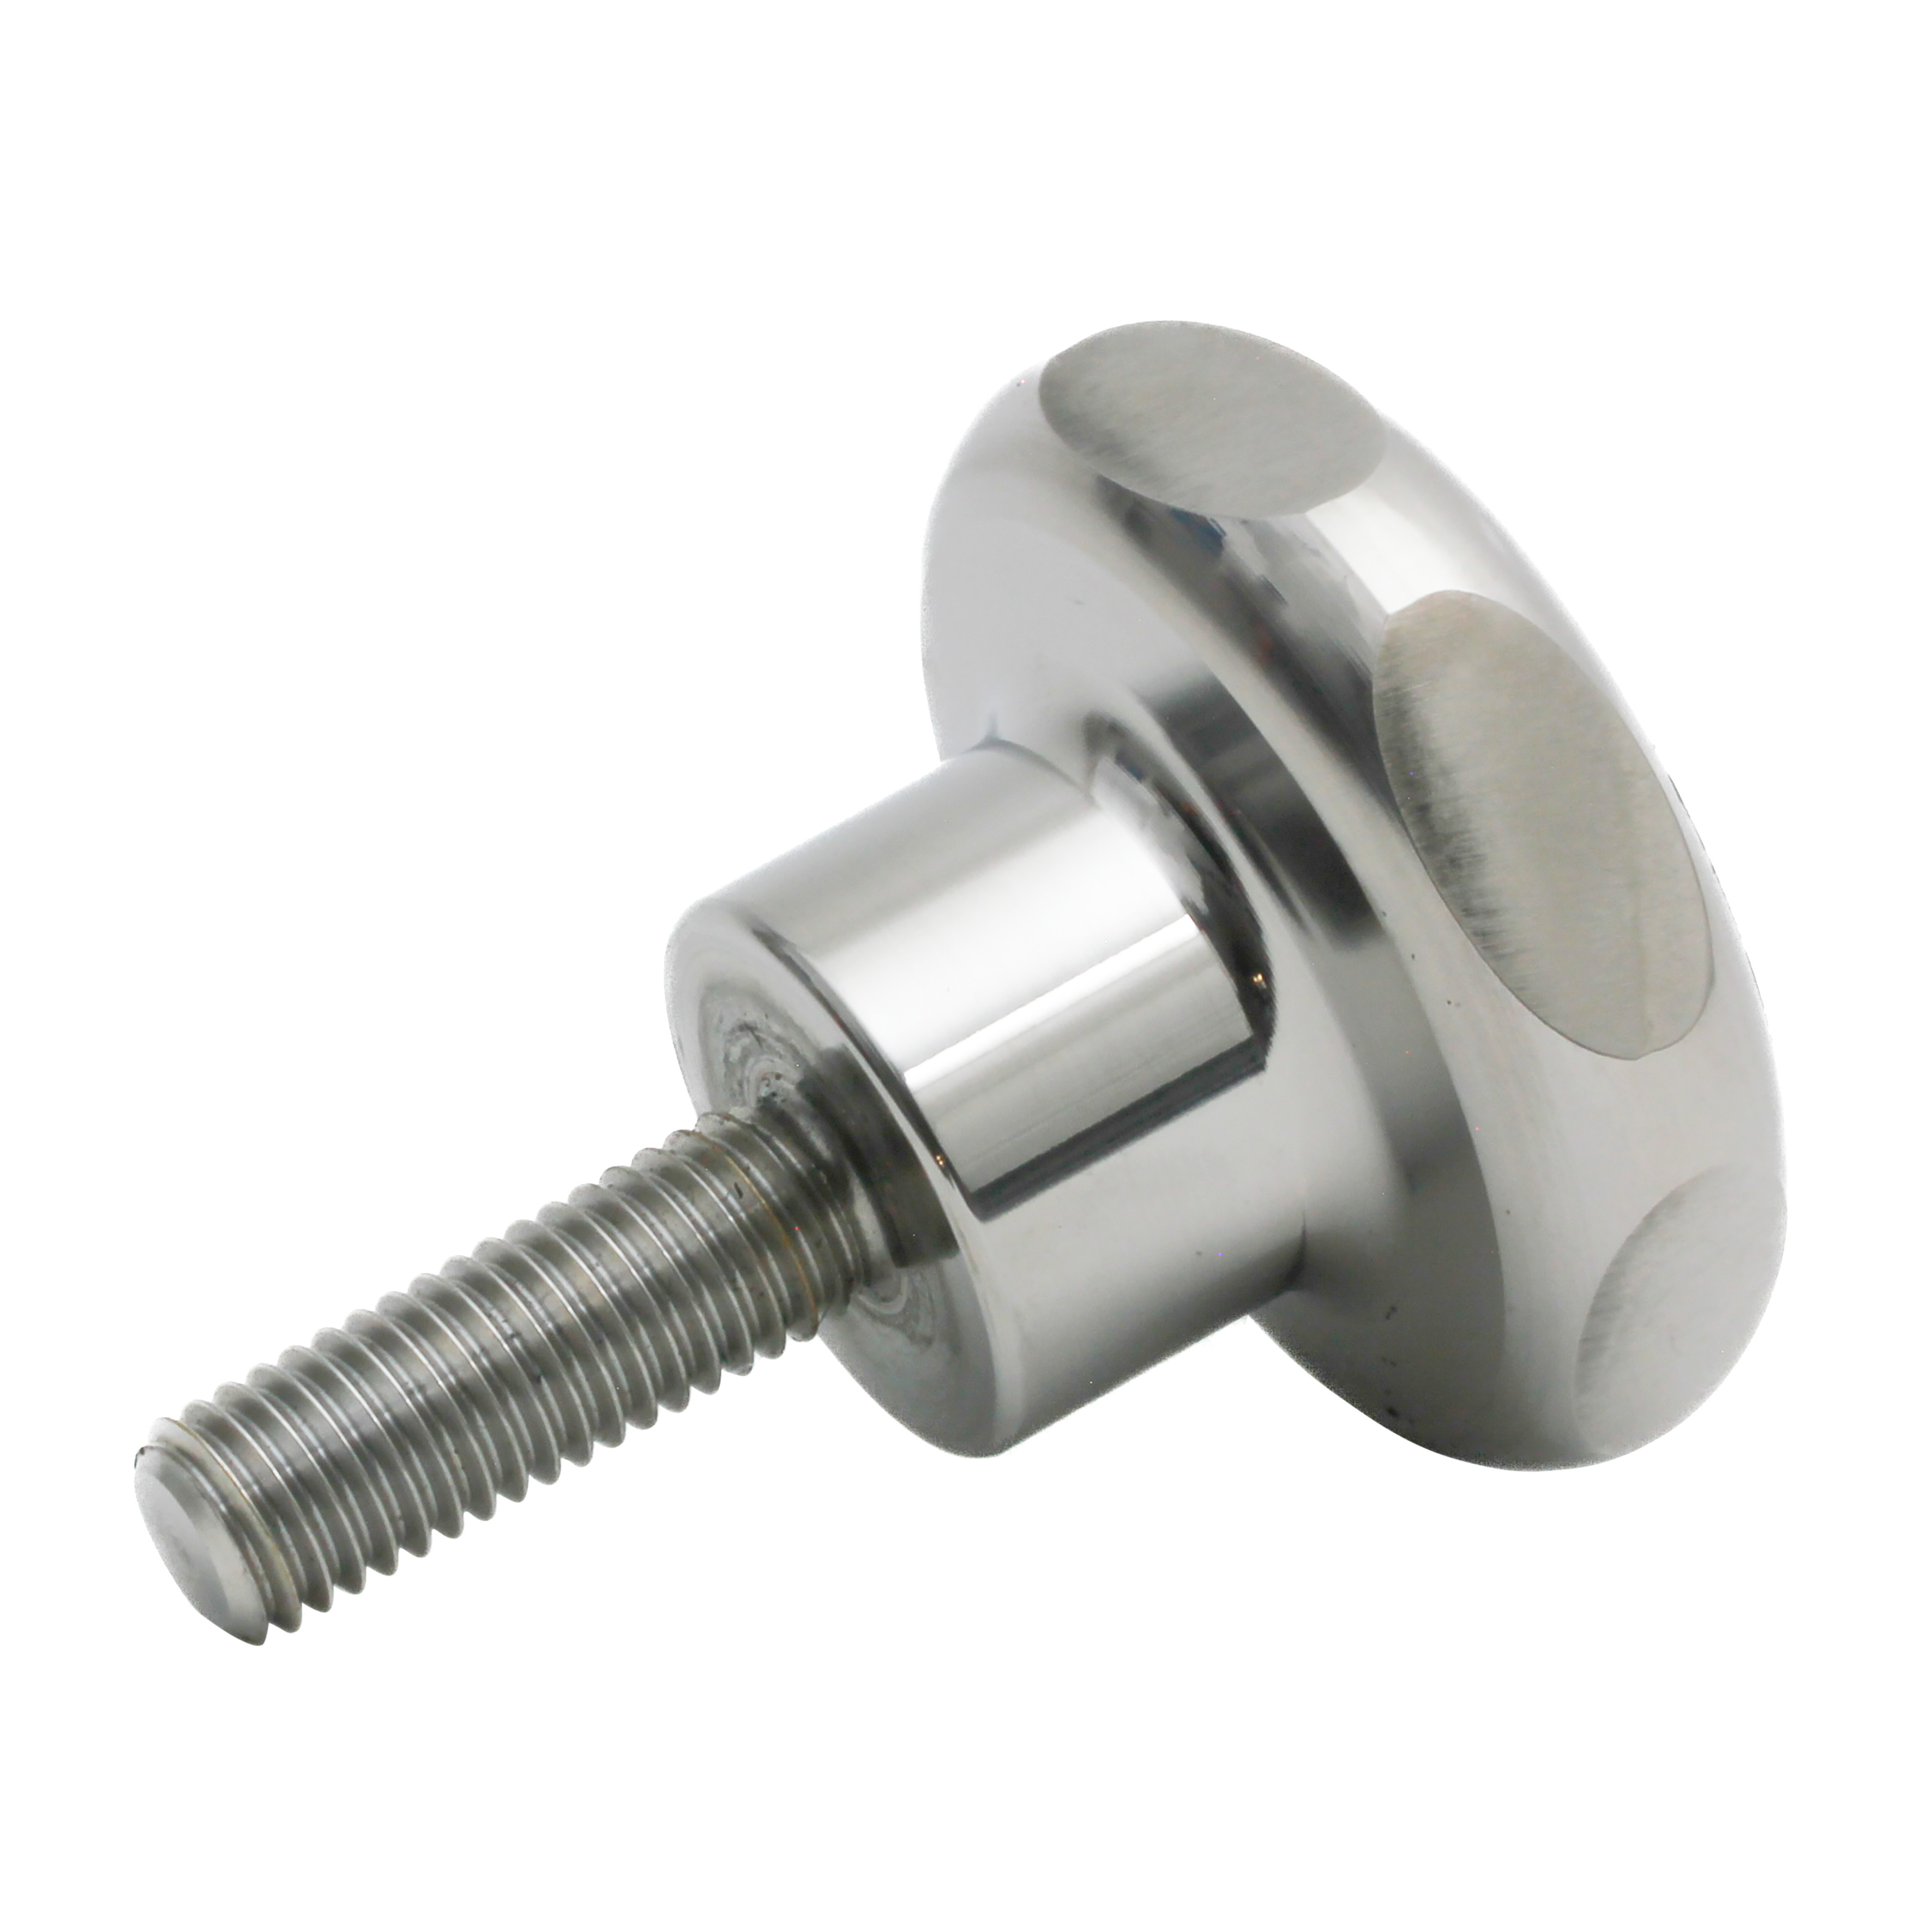 Stainless steel hexagonal headed thumb screw - Male - stainless steel - 